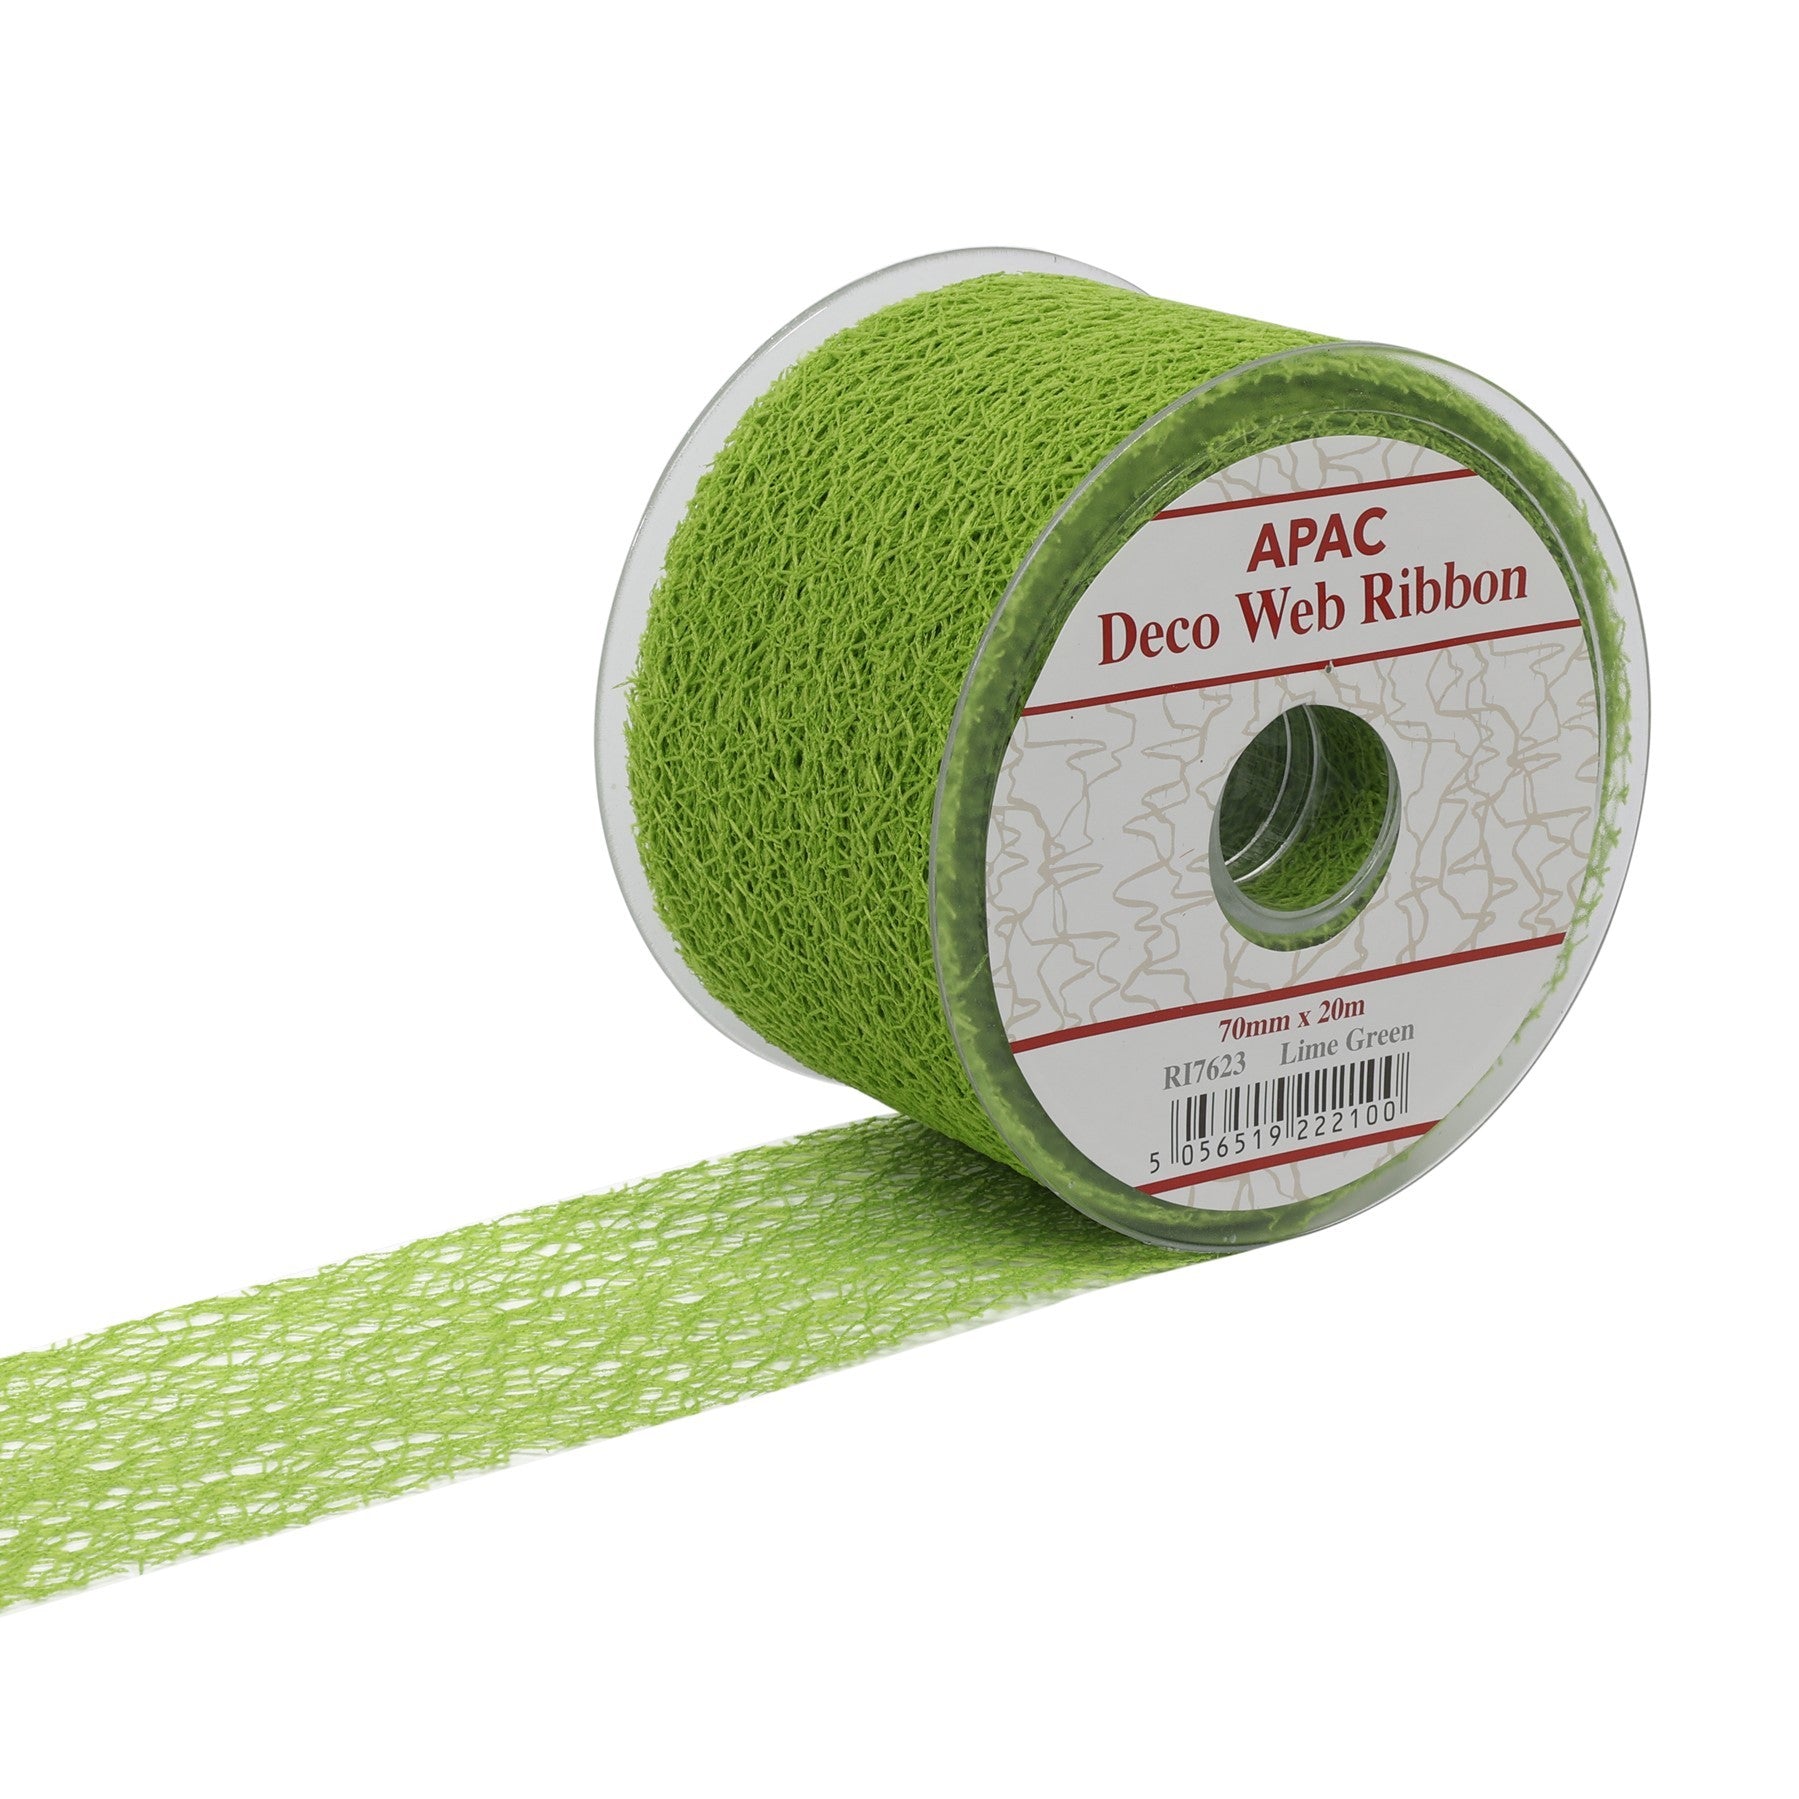 View Lime Green Deco Web Ribbon 70mm x 20m information